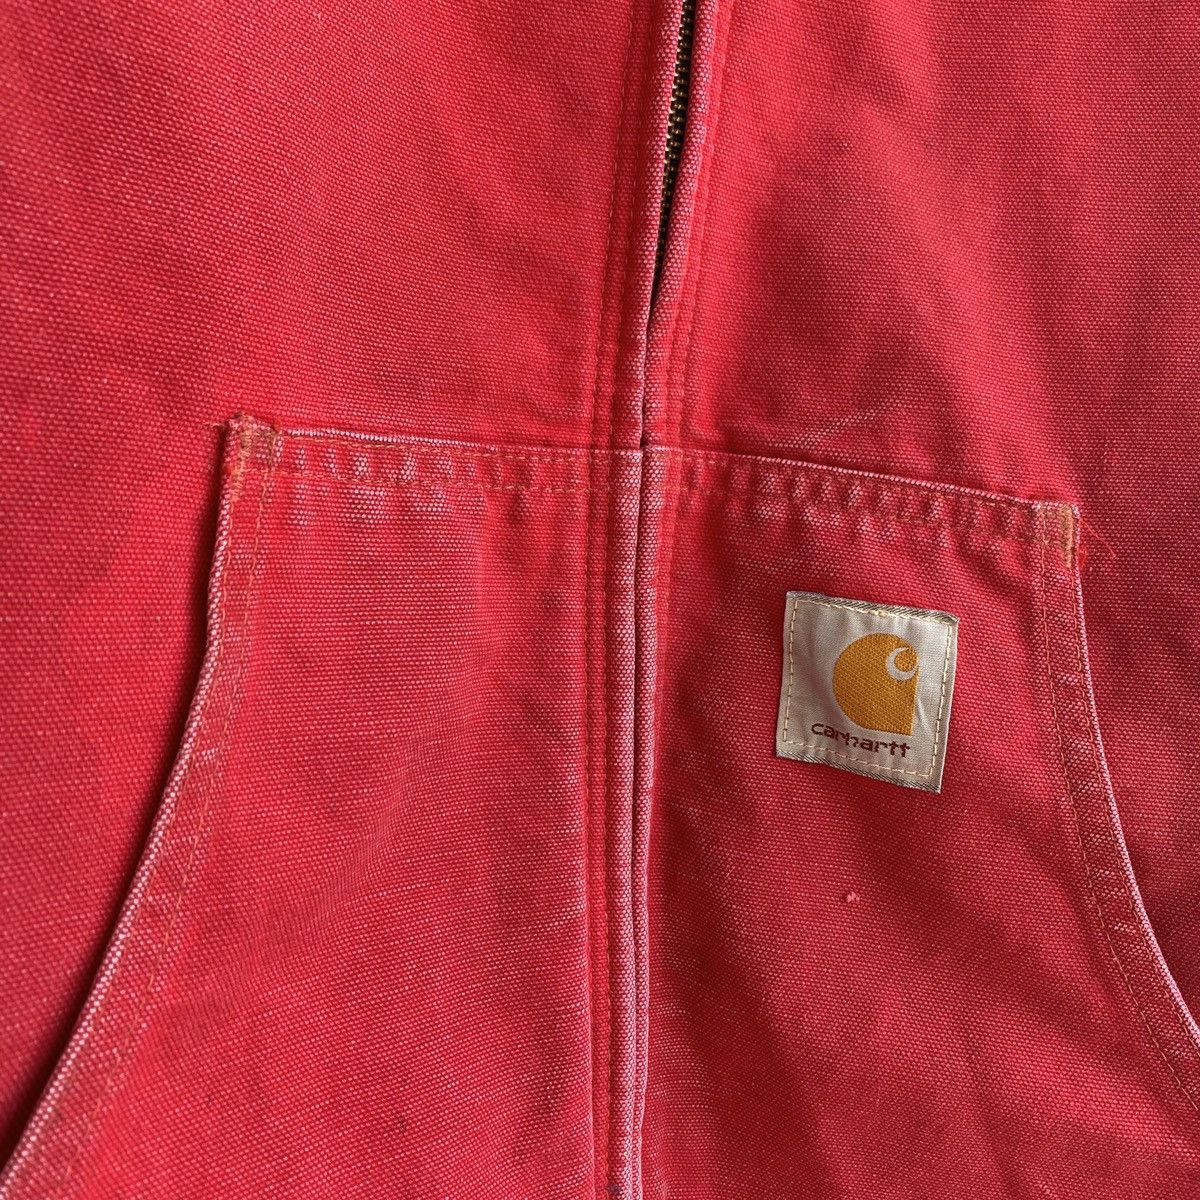 Carhartt Carhartt Hooded Zip Red Jacket Size US M / EU 48-50 / 2 - 3 Thumbnail